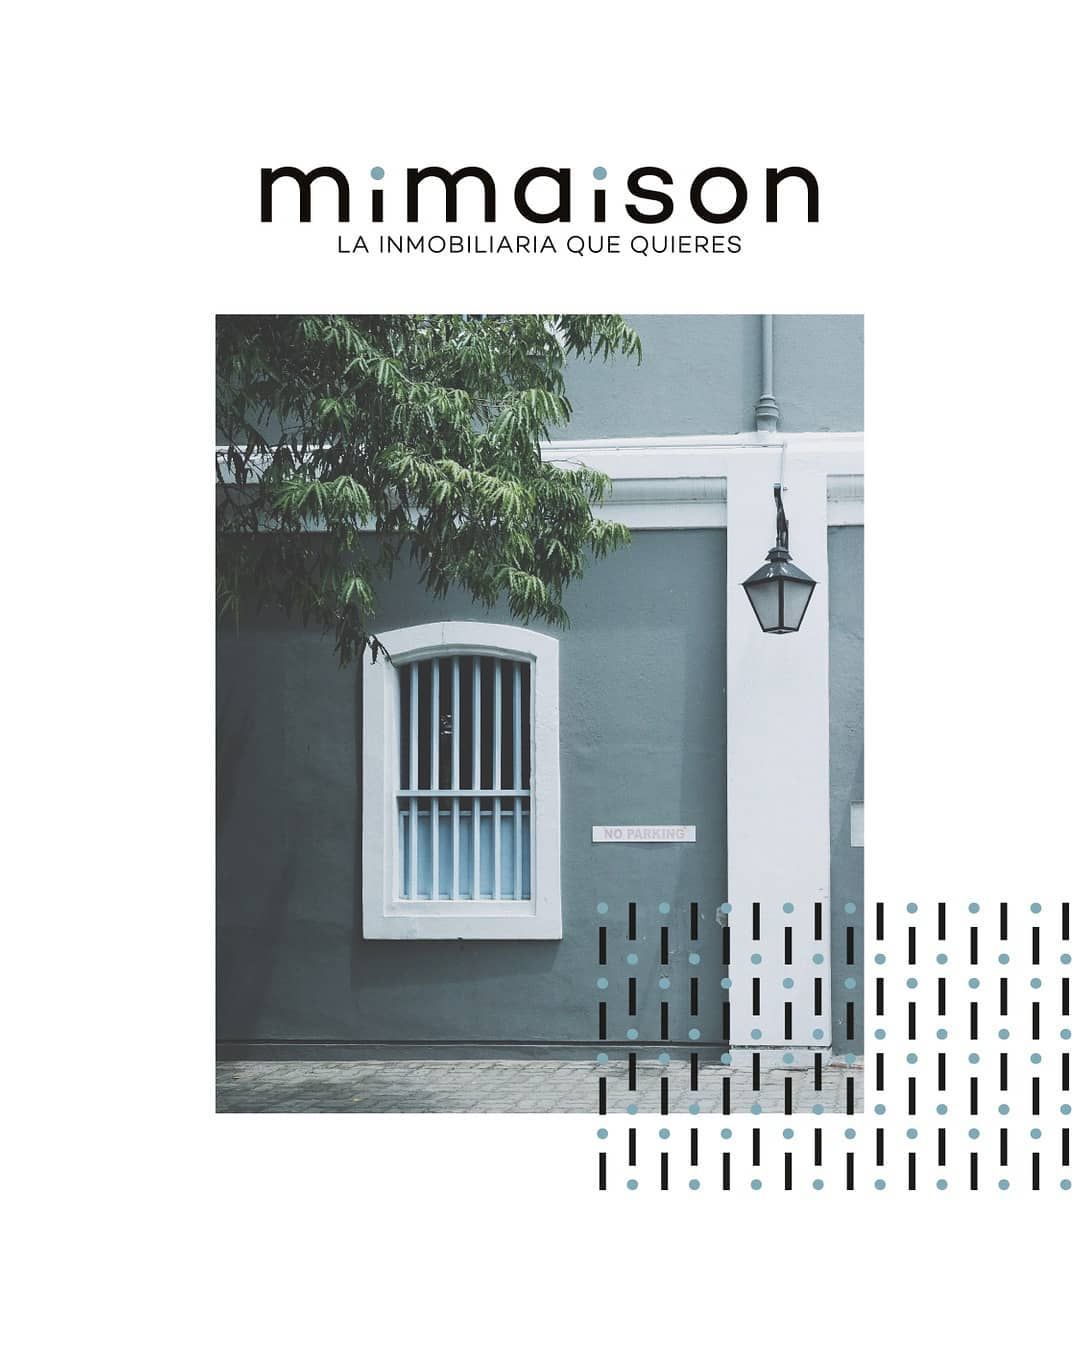 Mimaison - Creación de Nombre - Naming - Diseño de Branding - Inmobiliaria - Madrid